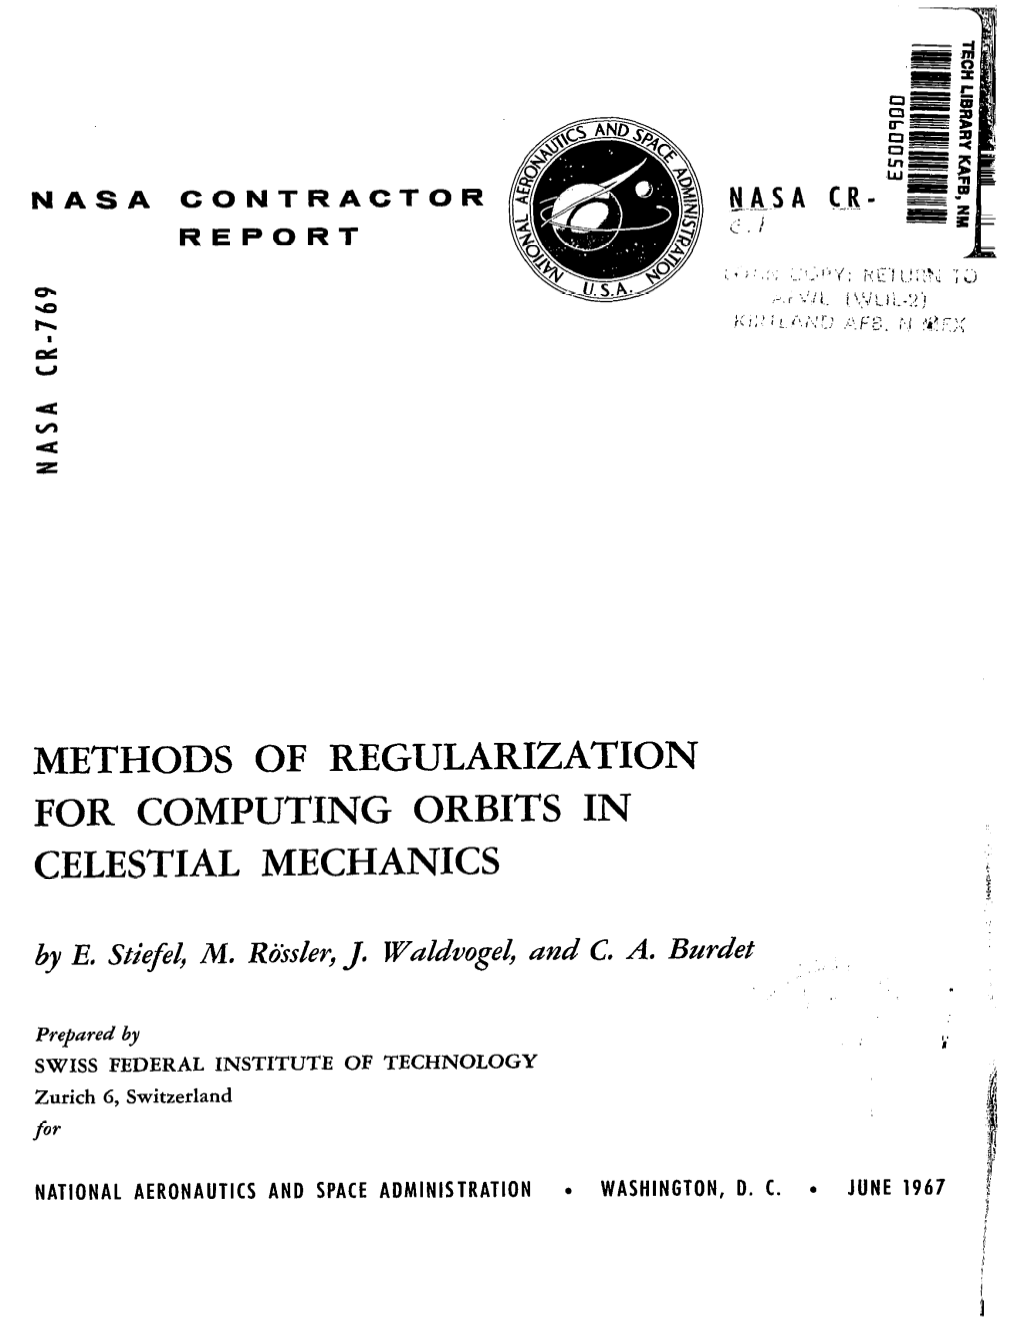 Methods of Regularization for Computing Orbits in Celestial Mechanics